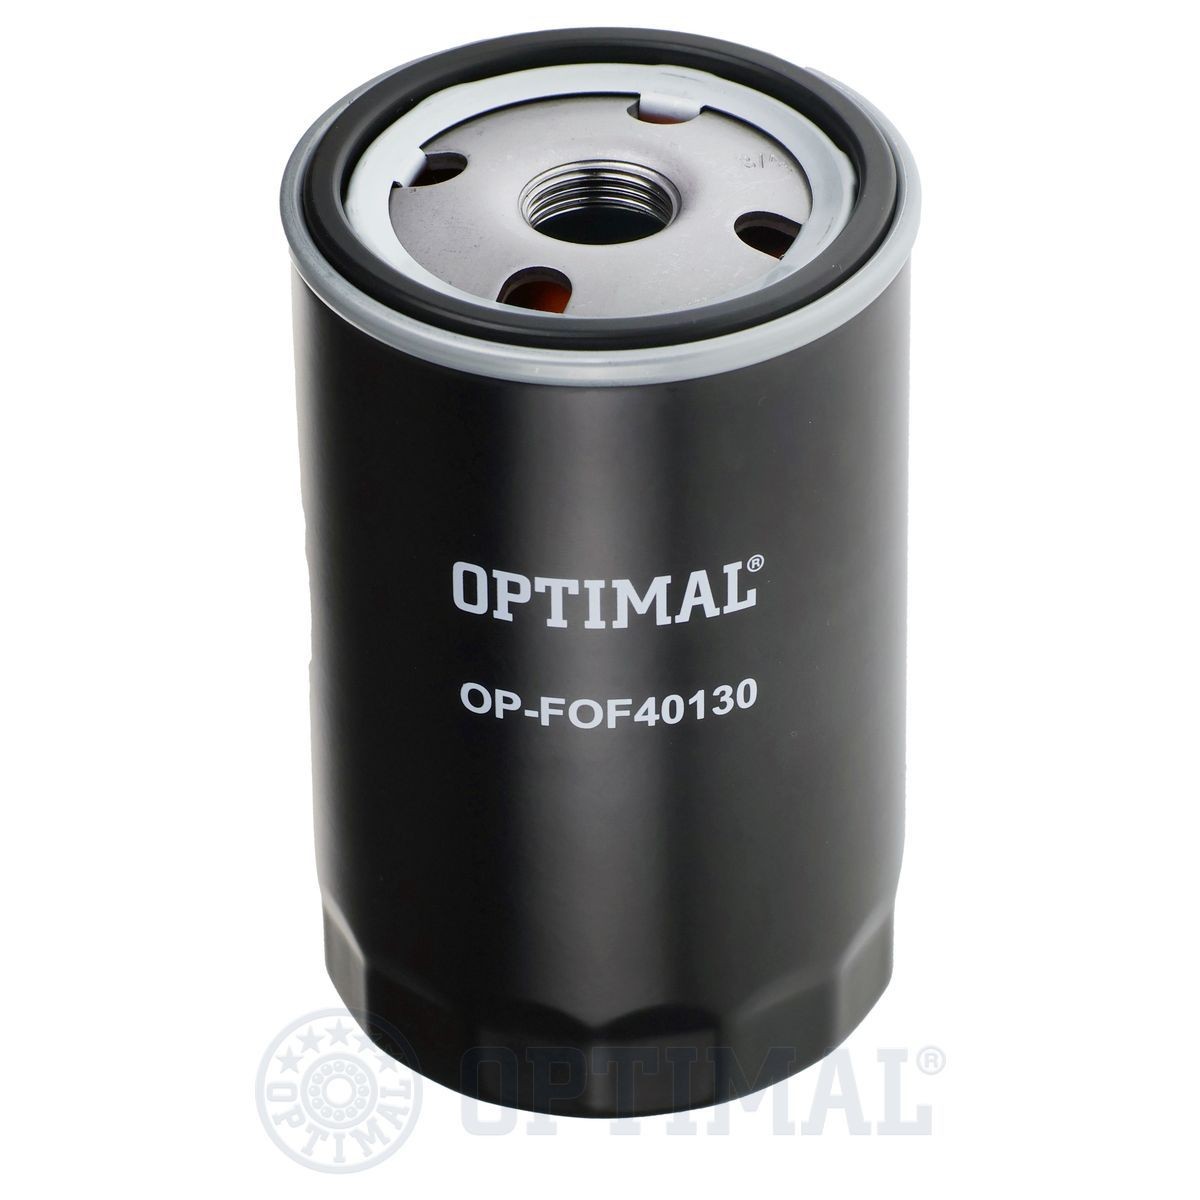 OPTIMAL OP-FOF40130 Oil filter 103-180-06-10